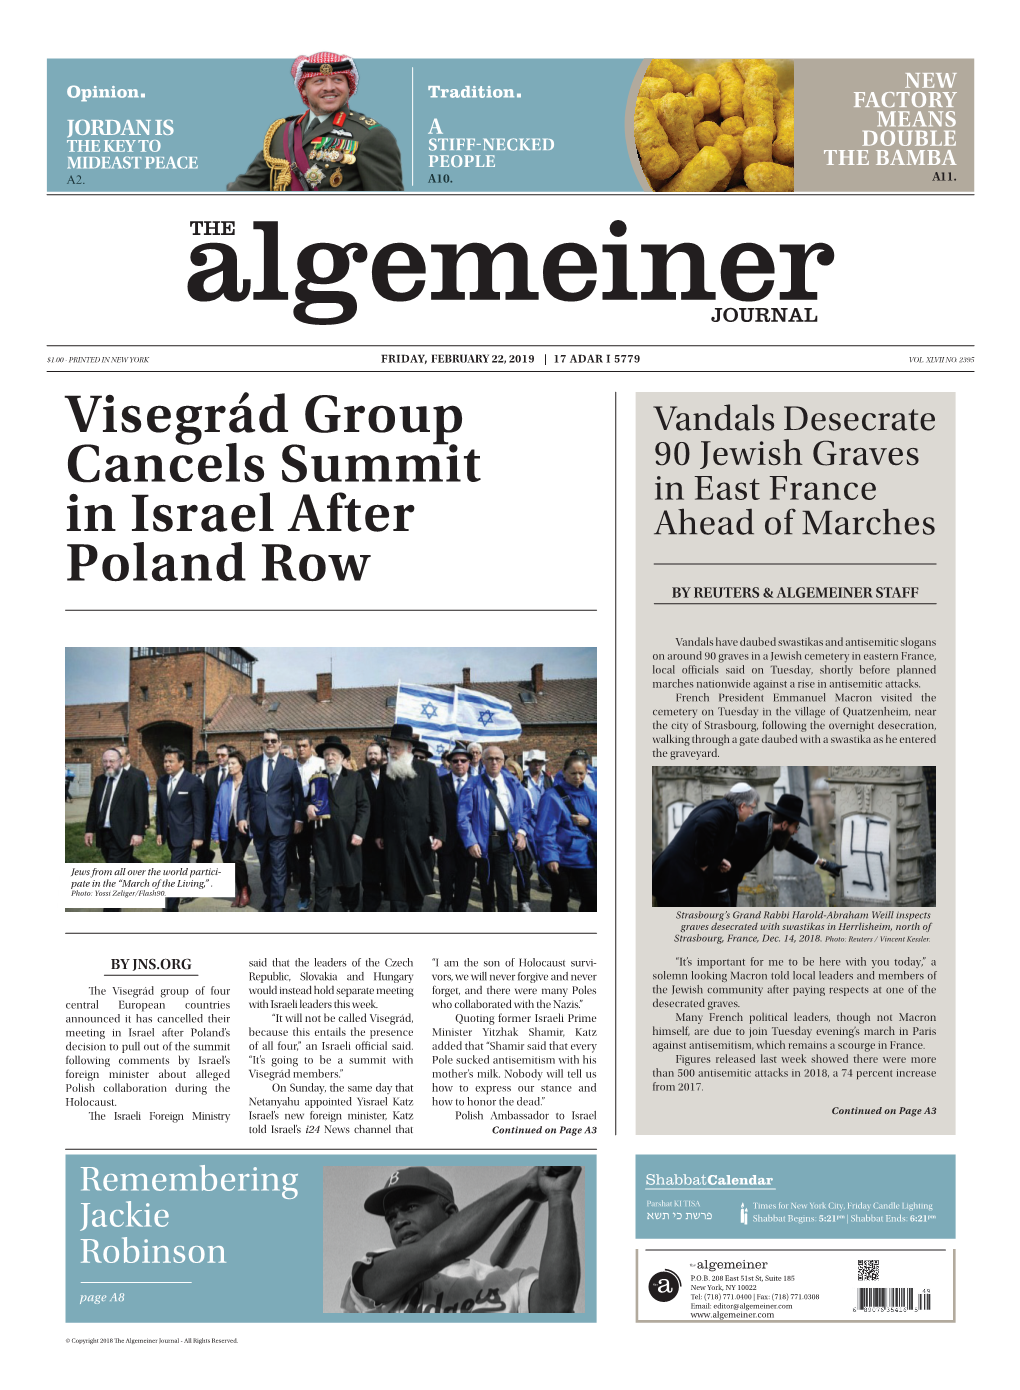 Visegrád Group Cancels Summit in Israel After